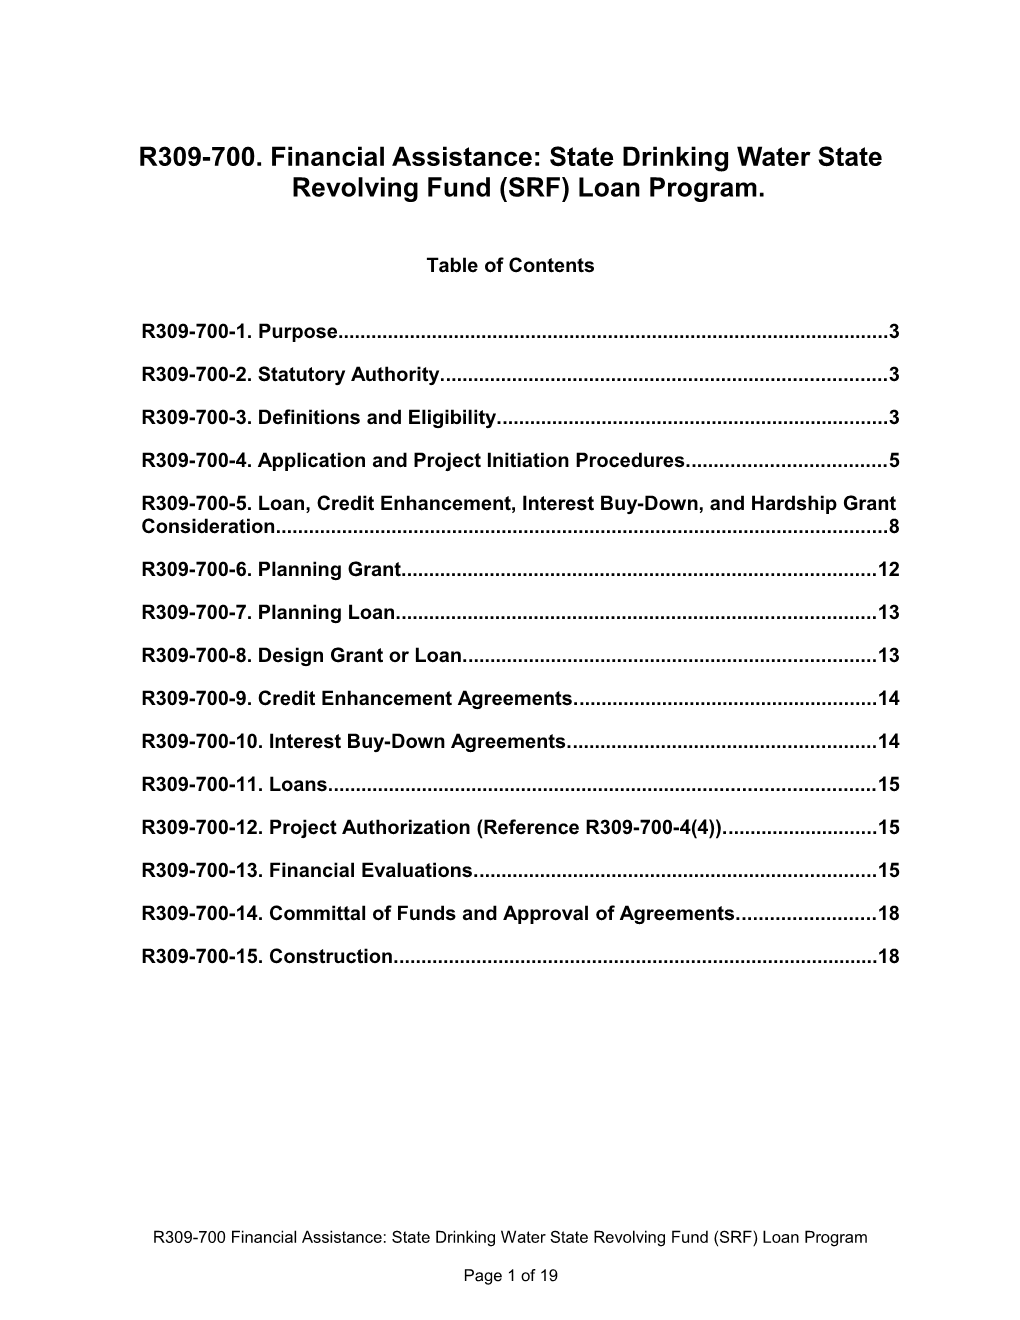 R309-700.Financial Assistance: State Drinking Waterstate Revolving Fund (SRF) Loan Program